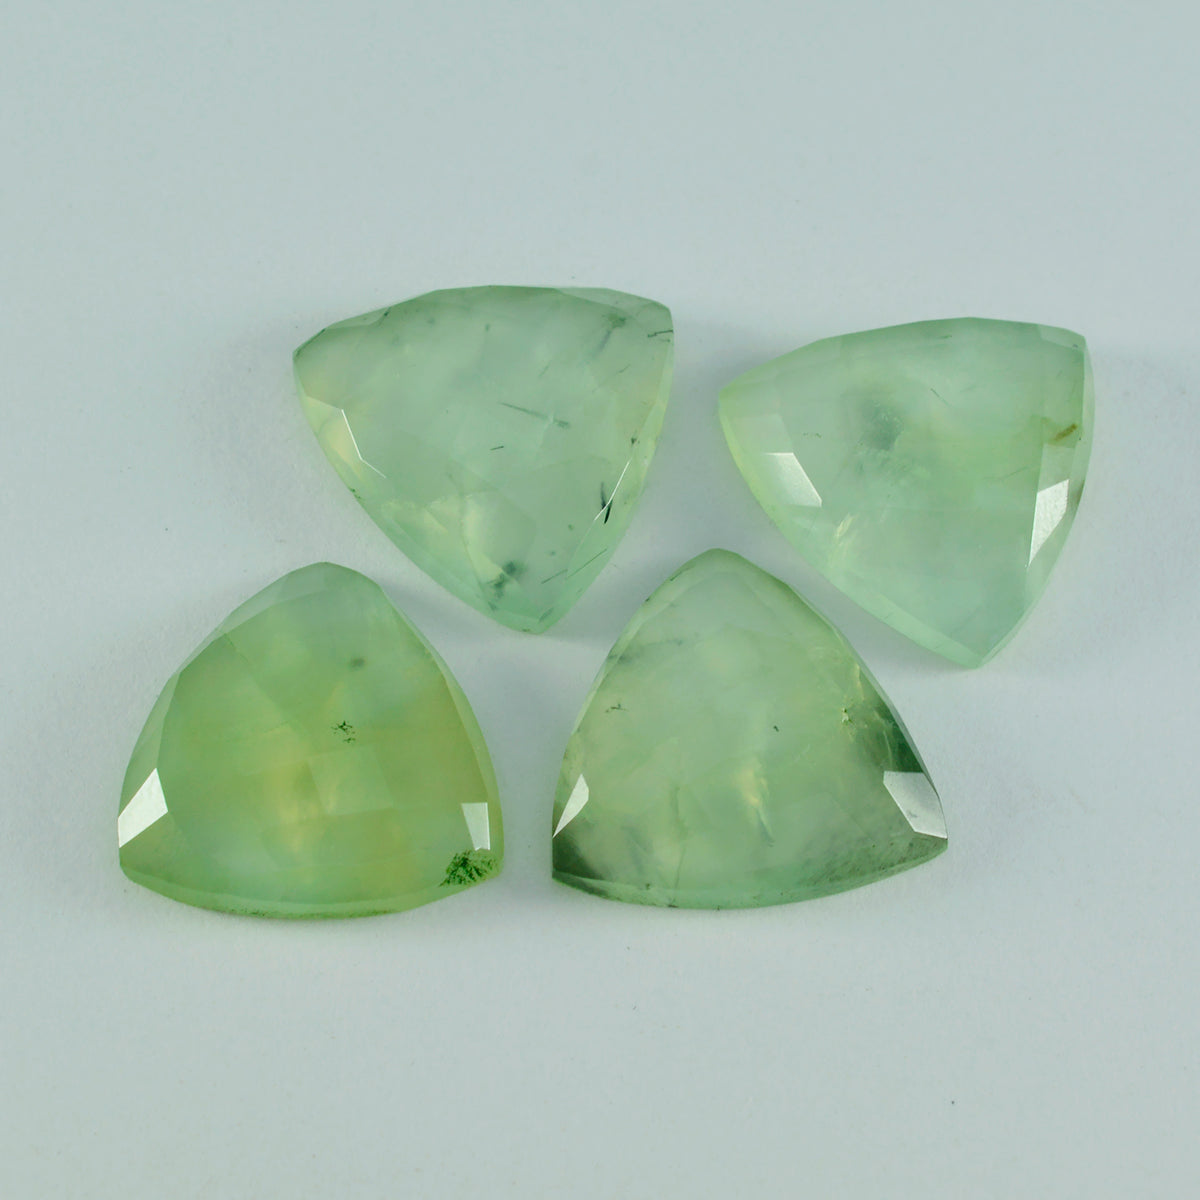 Riyogems 1PC Green Prehnite Faceted 15x15 mm Trillion Shape A+ Quality Loose Gemstone